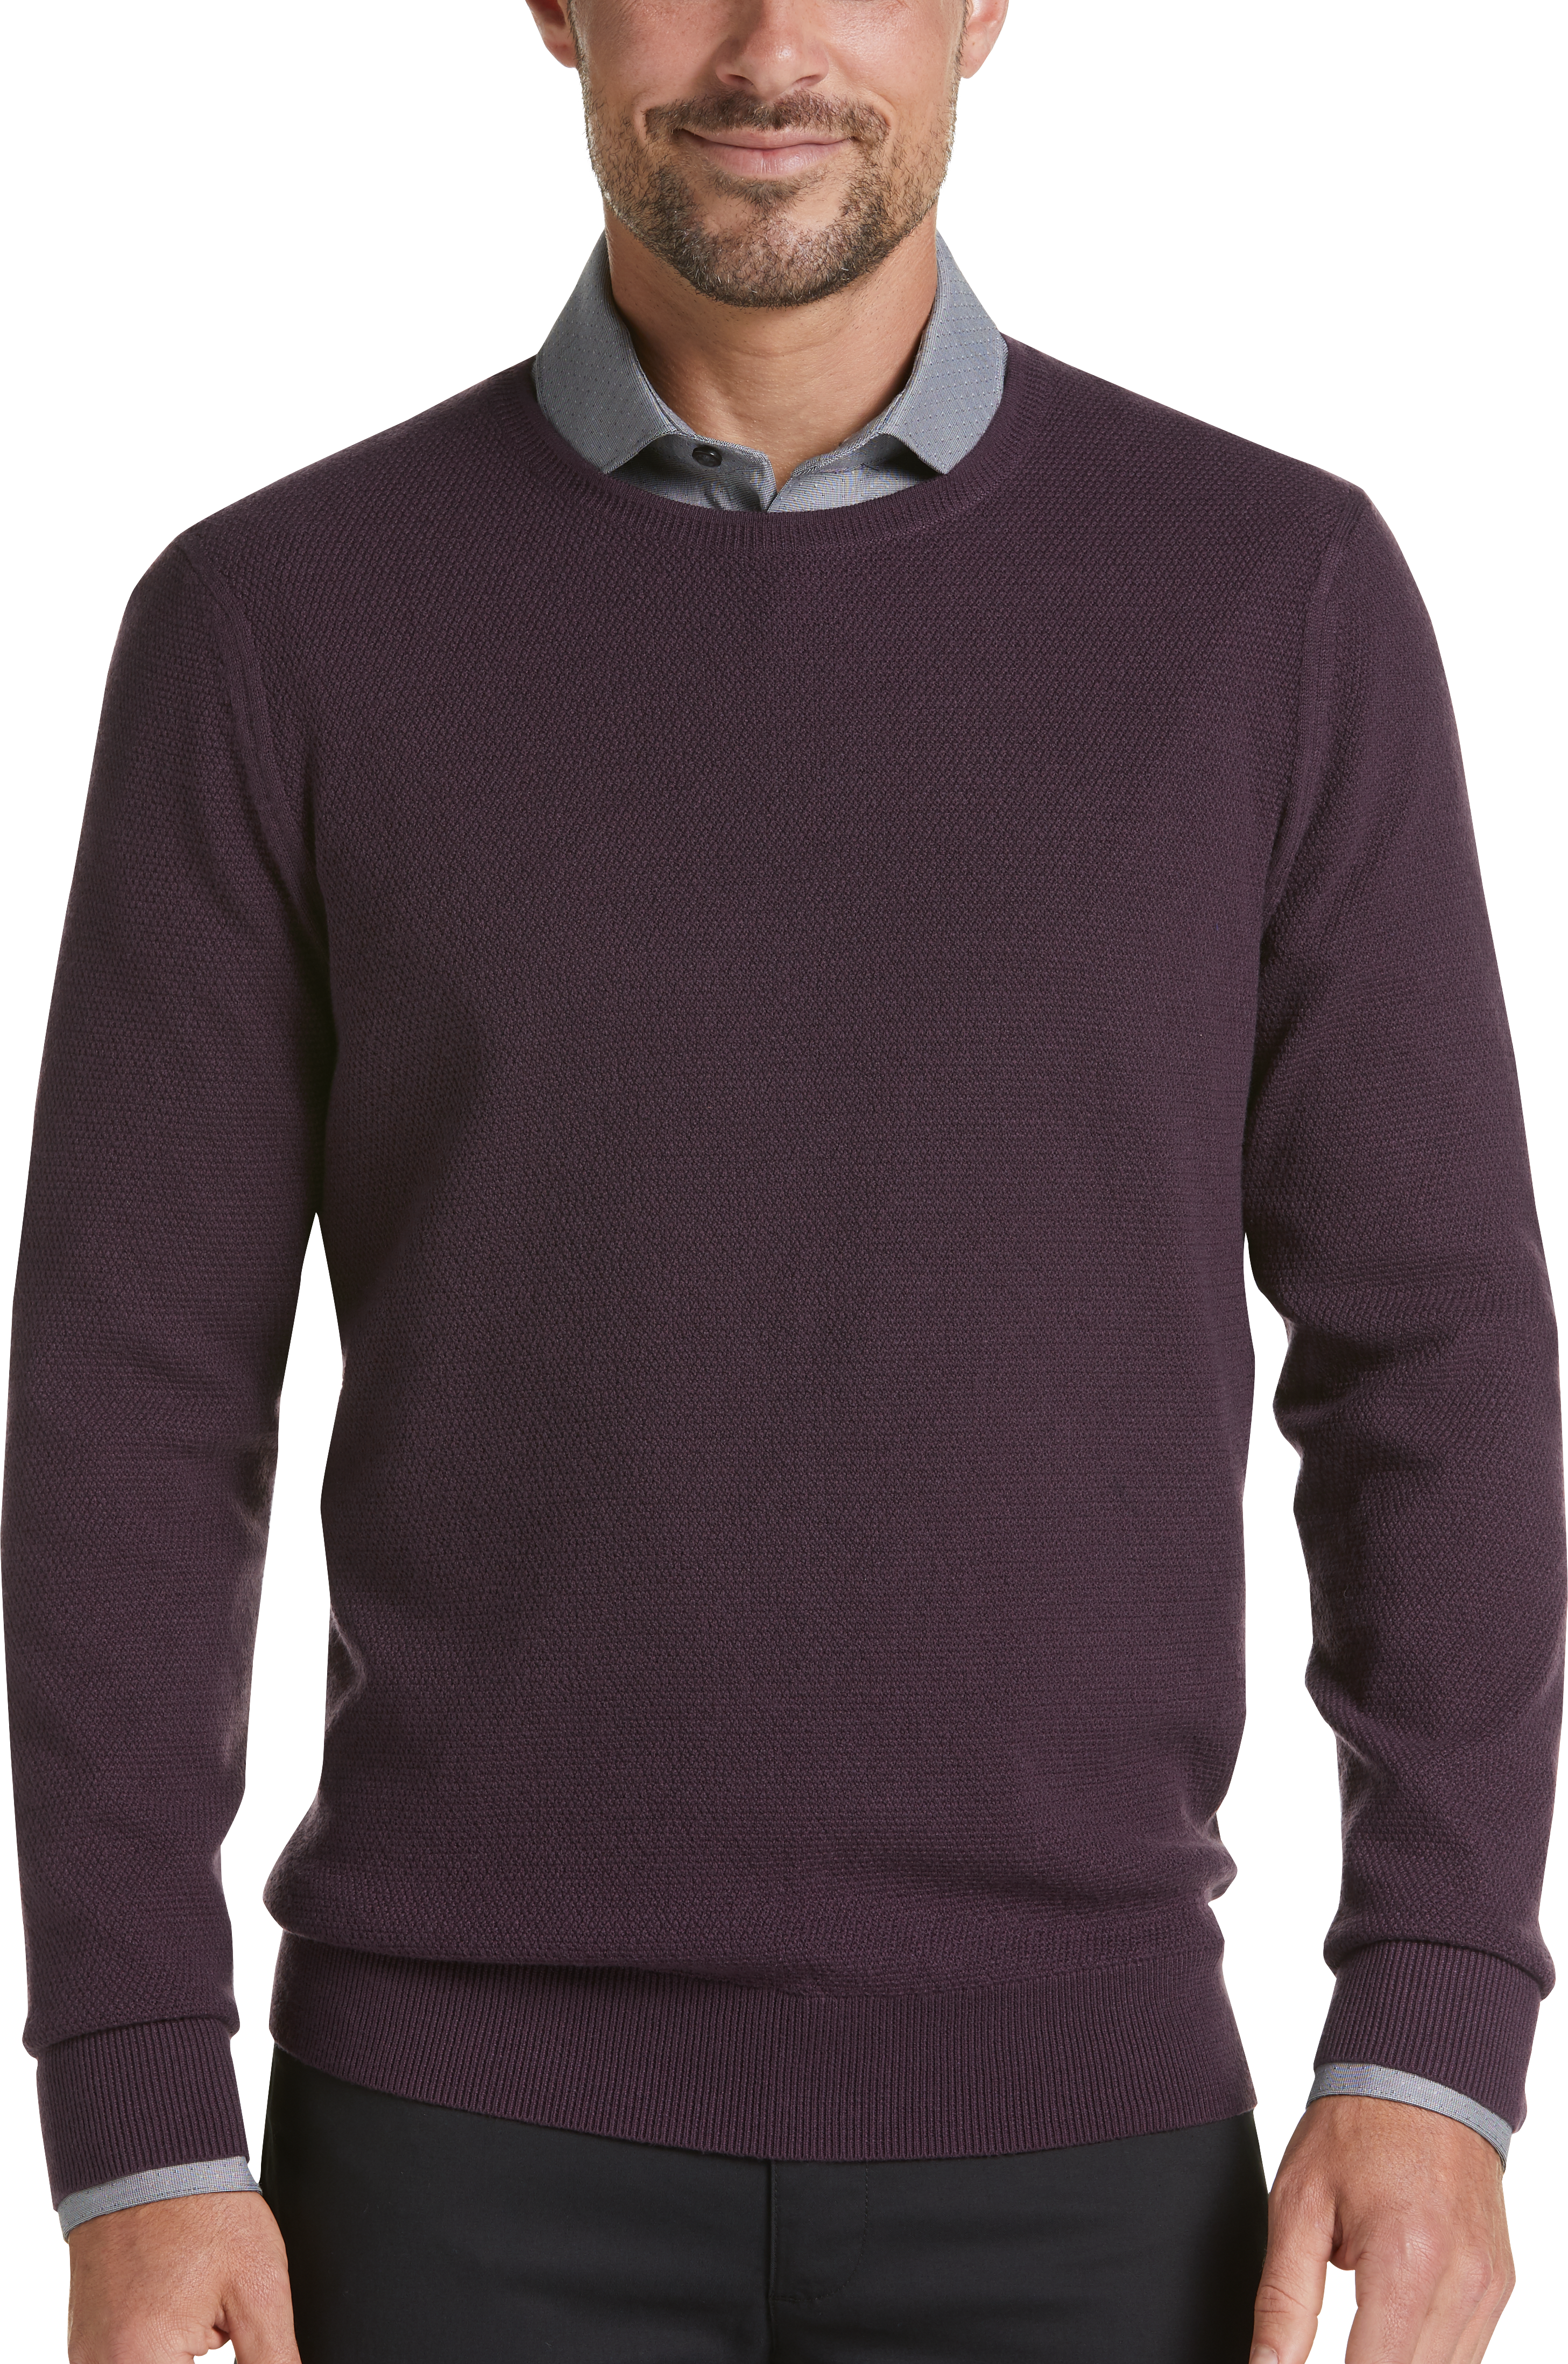 JOE Joseph Abboud Burgundy Slim Fit Crew Neck Sweater - Men's Big ...